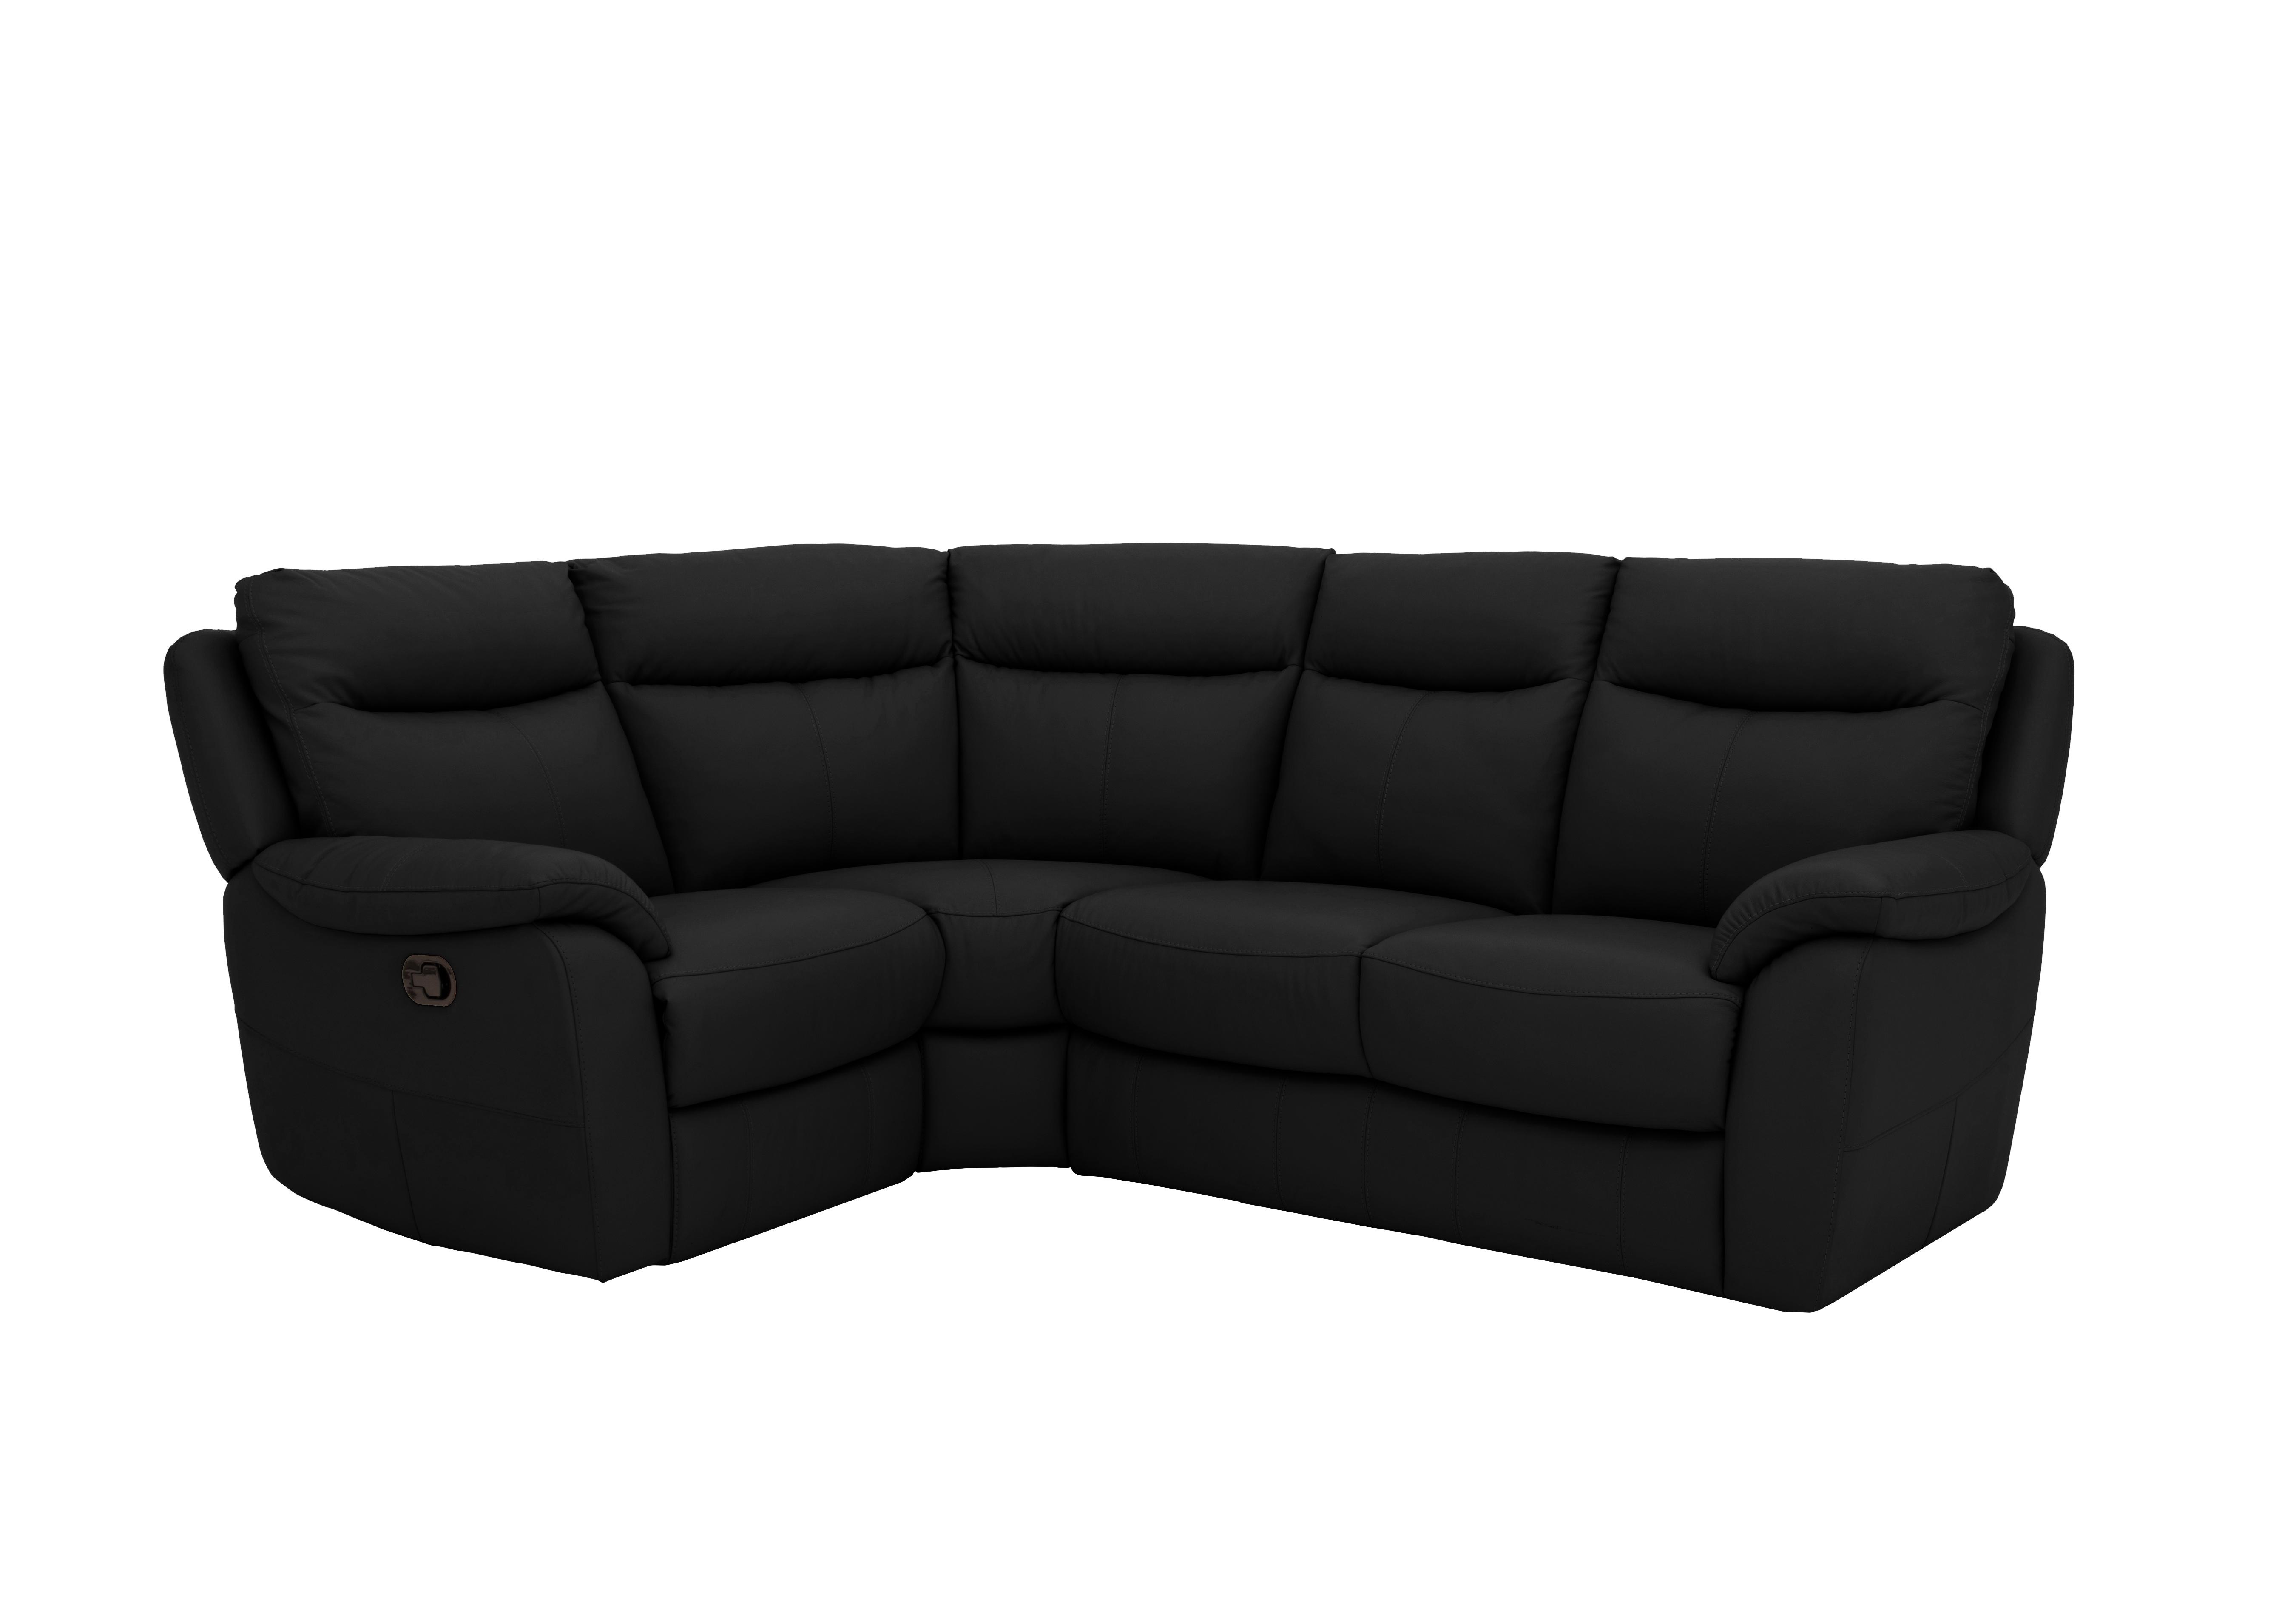 Snug Compact Leather Corner Sofa in Bv-3500 Classic Black on Furniture Village